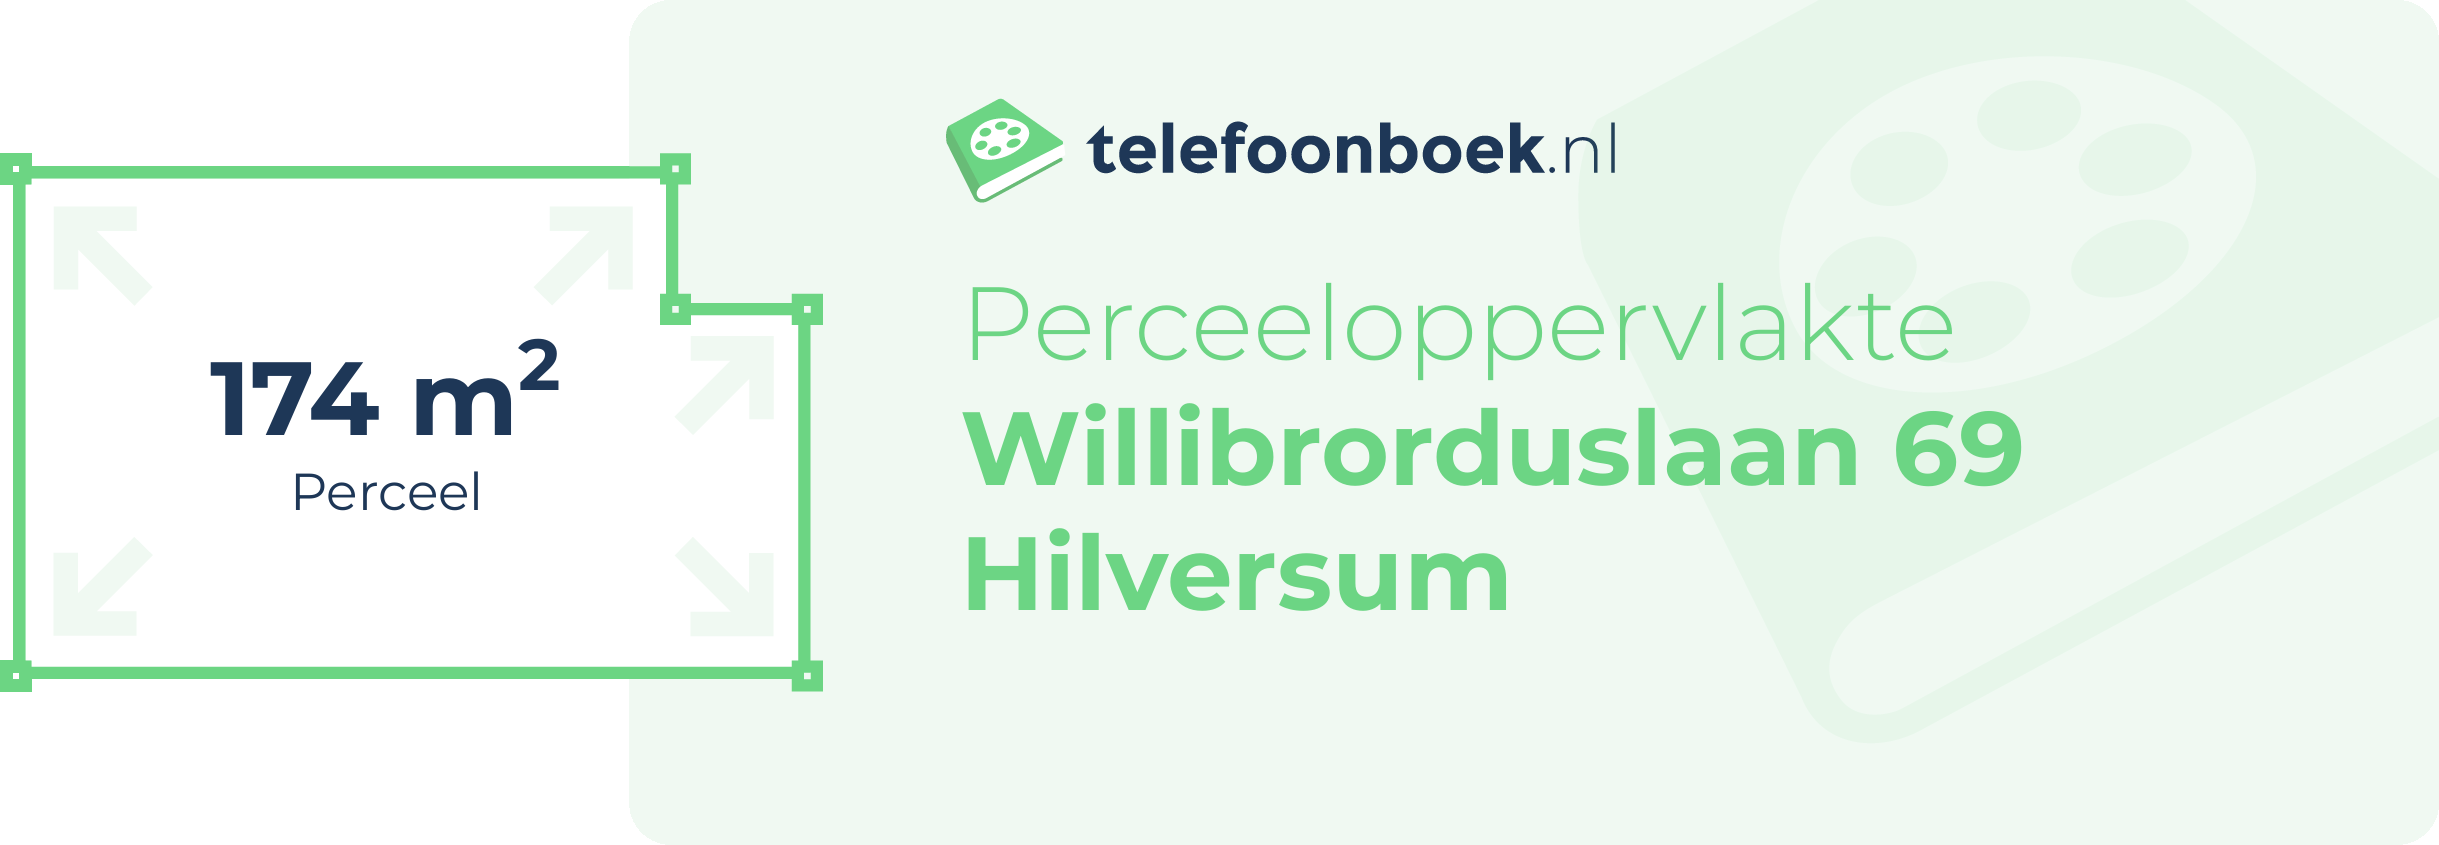 Perceeloppervlakte Willibrorduslaan 69 Hilversum